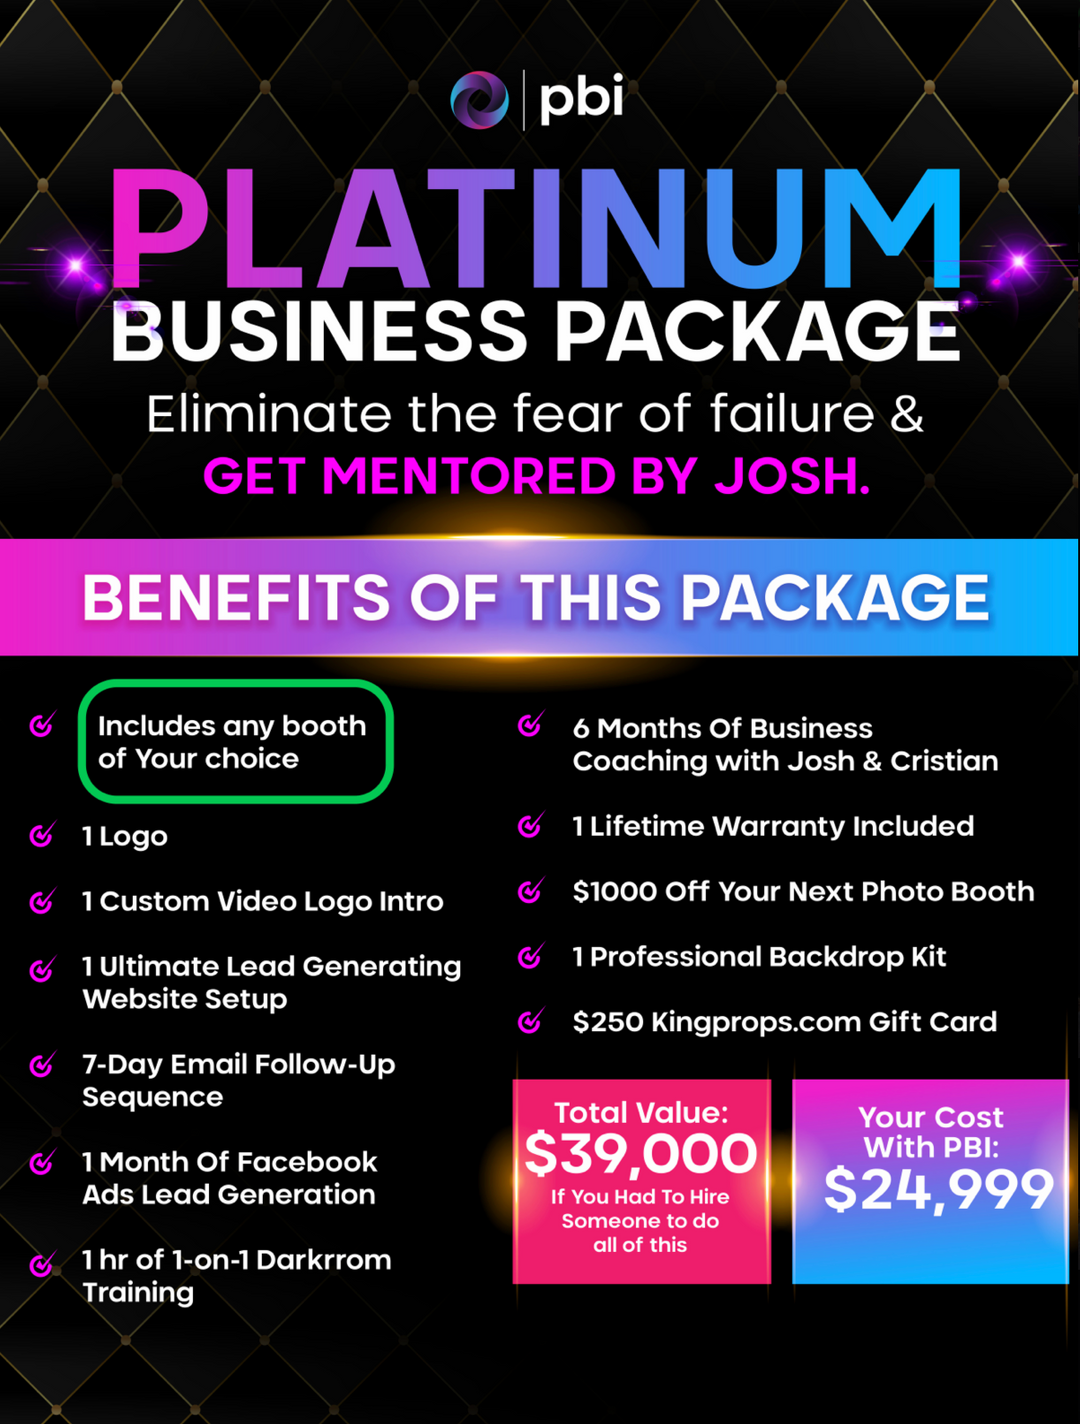 The PBI Platinum Business Package